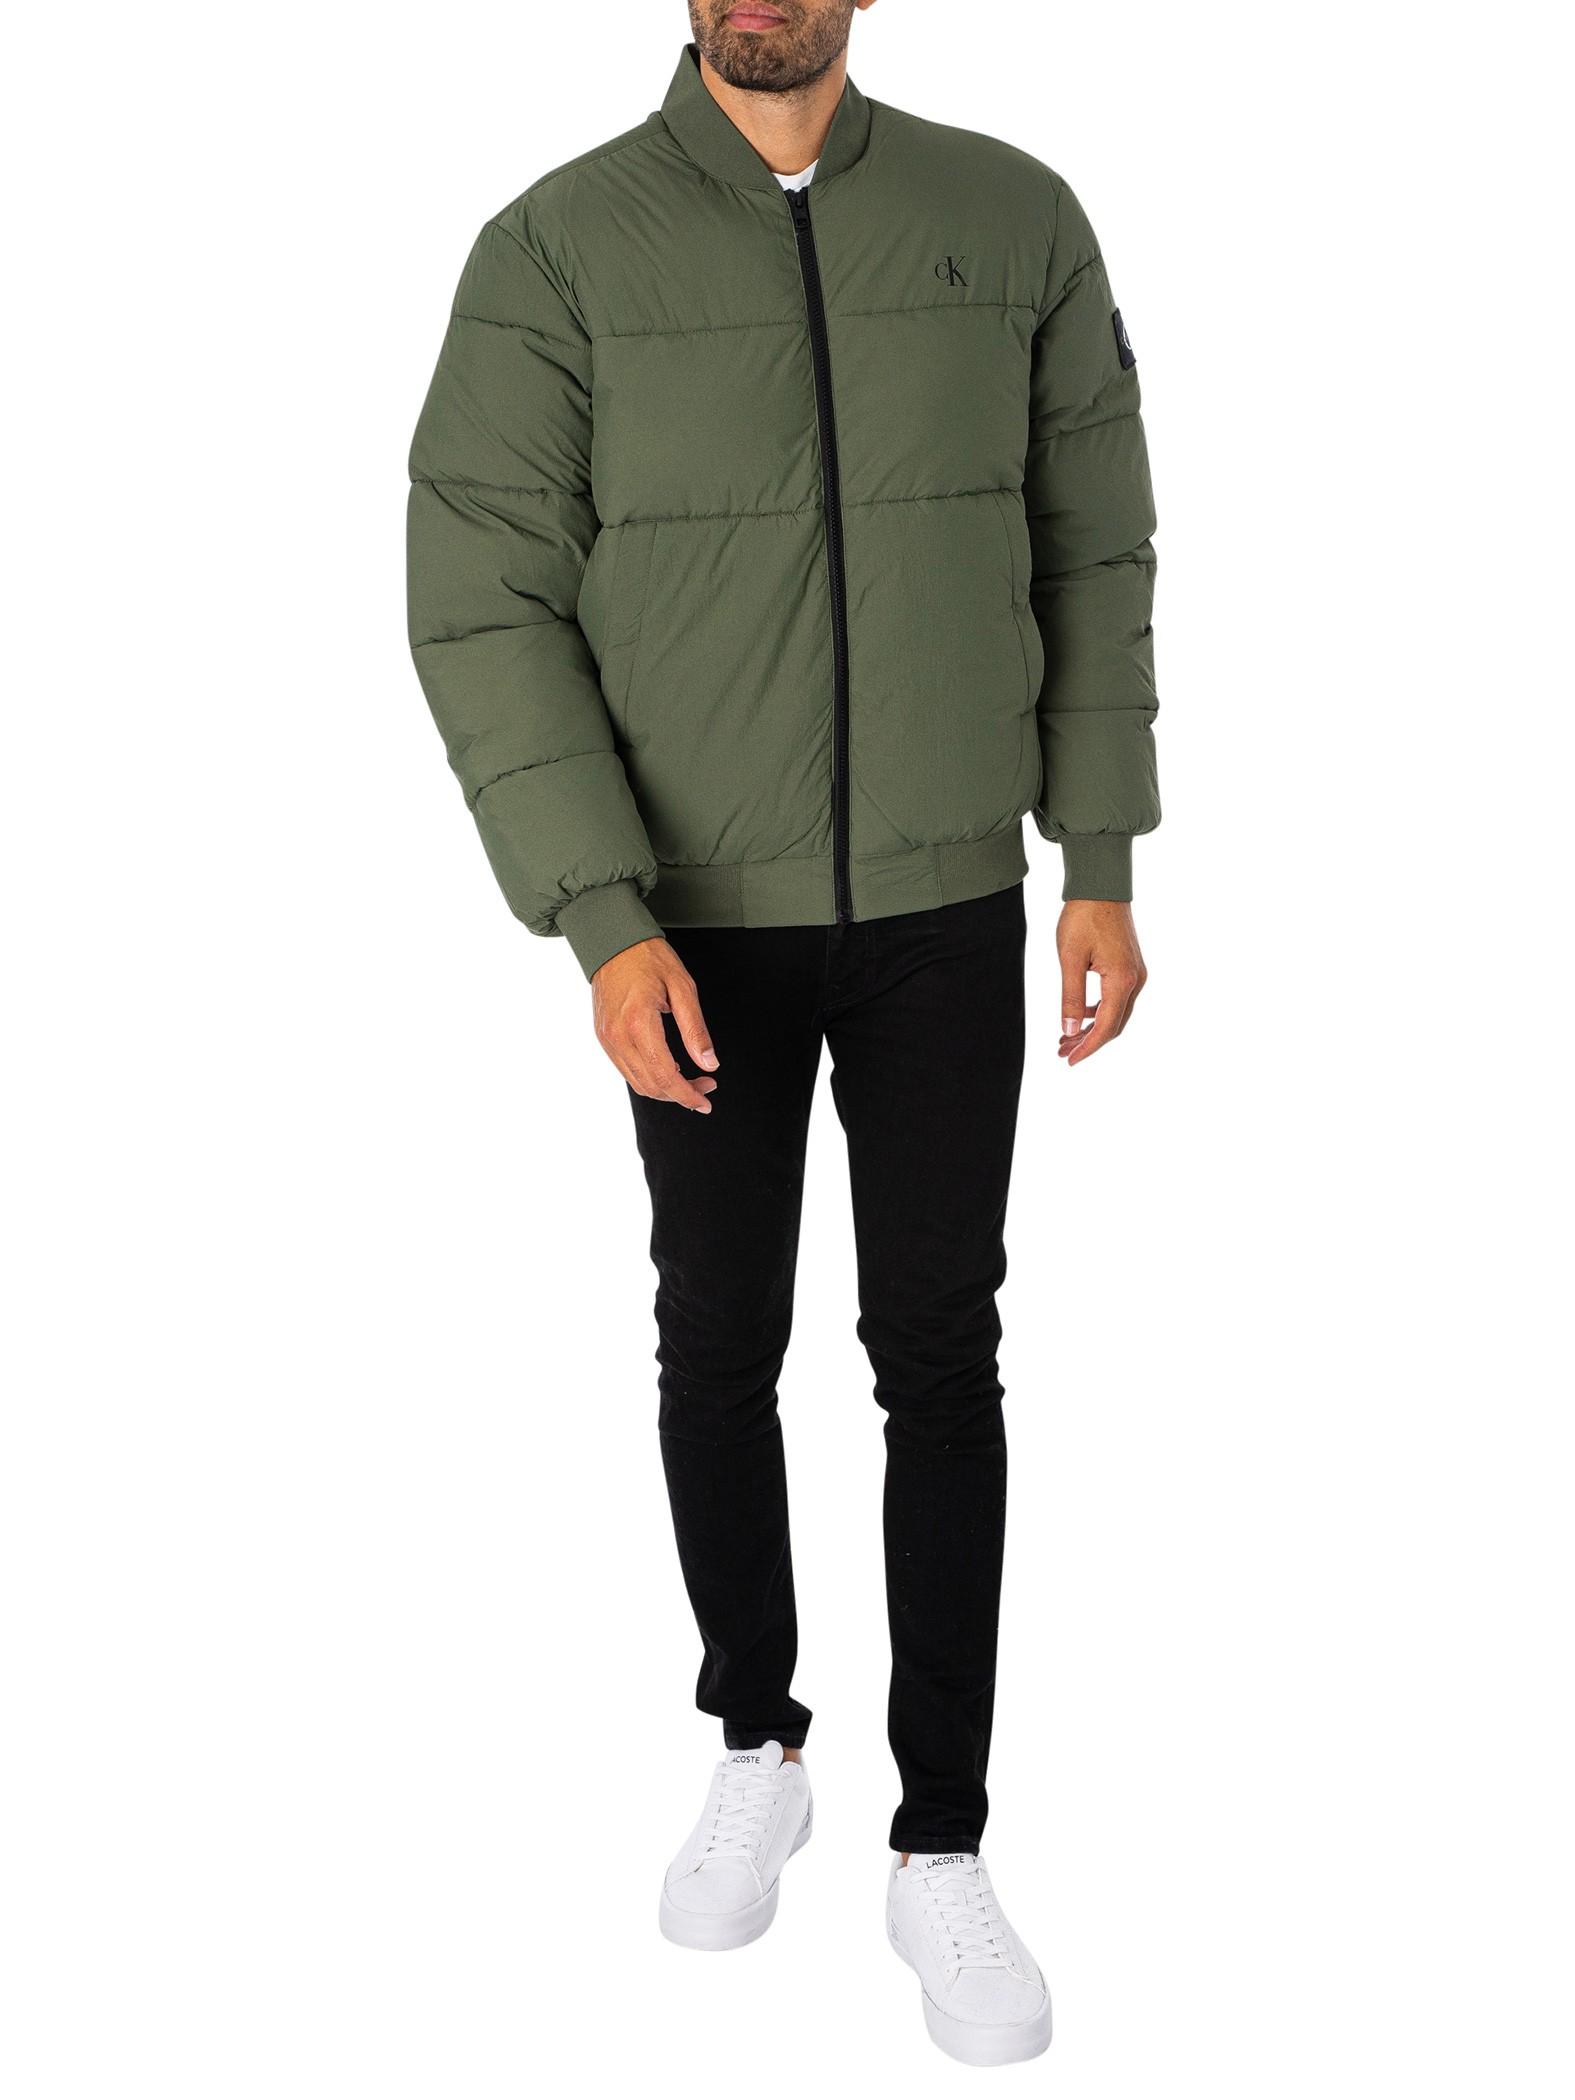 Men Calvin for | Lyst Bomber Jacket in Commercial Klein Jeans Green